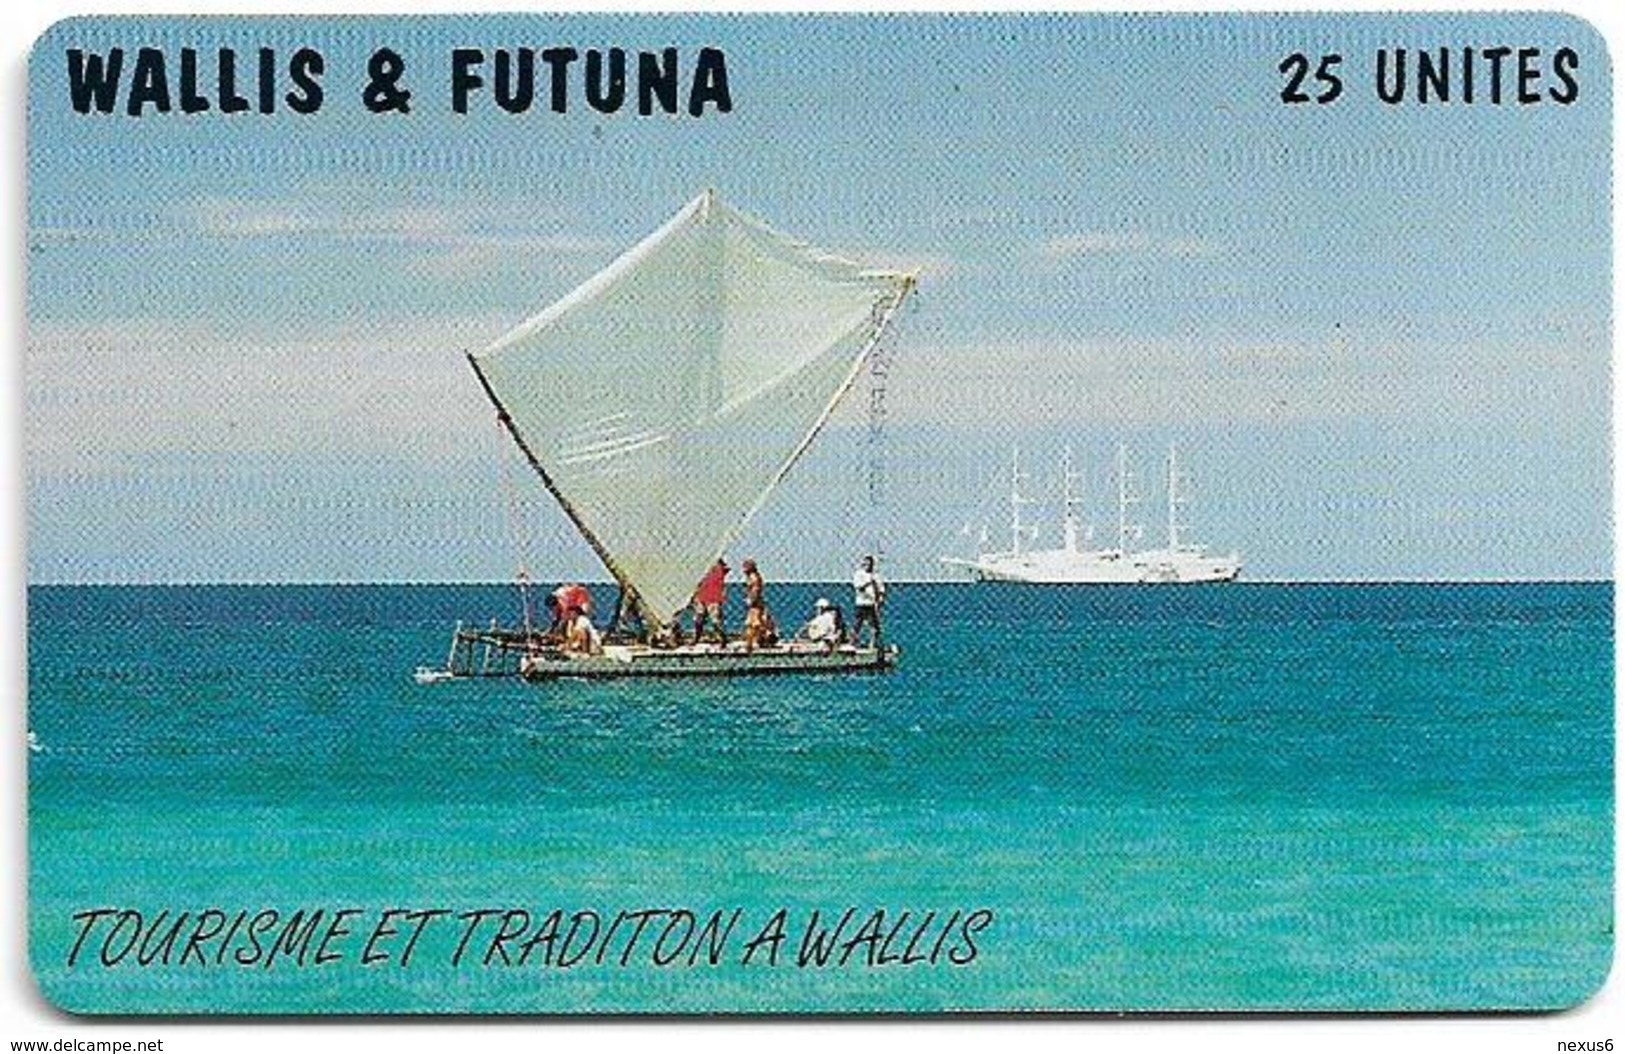 Wallis And Futuna - WF13 - Tourism Et Tradition à Wallis (Without CN.), 03.1998, 25Units, 2.400ex, Used - Wallis Y Futuna